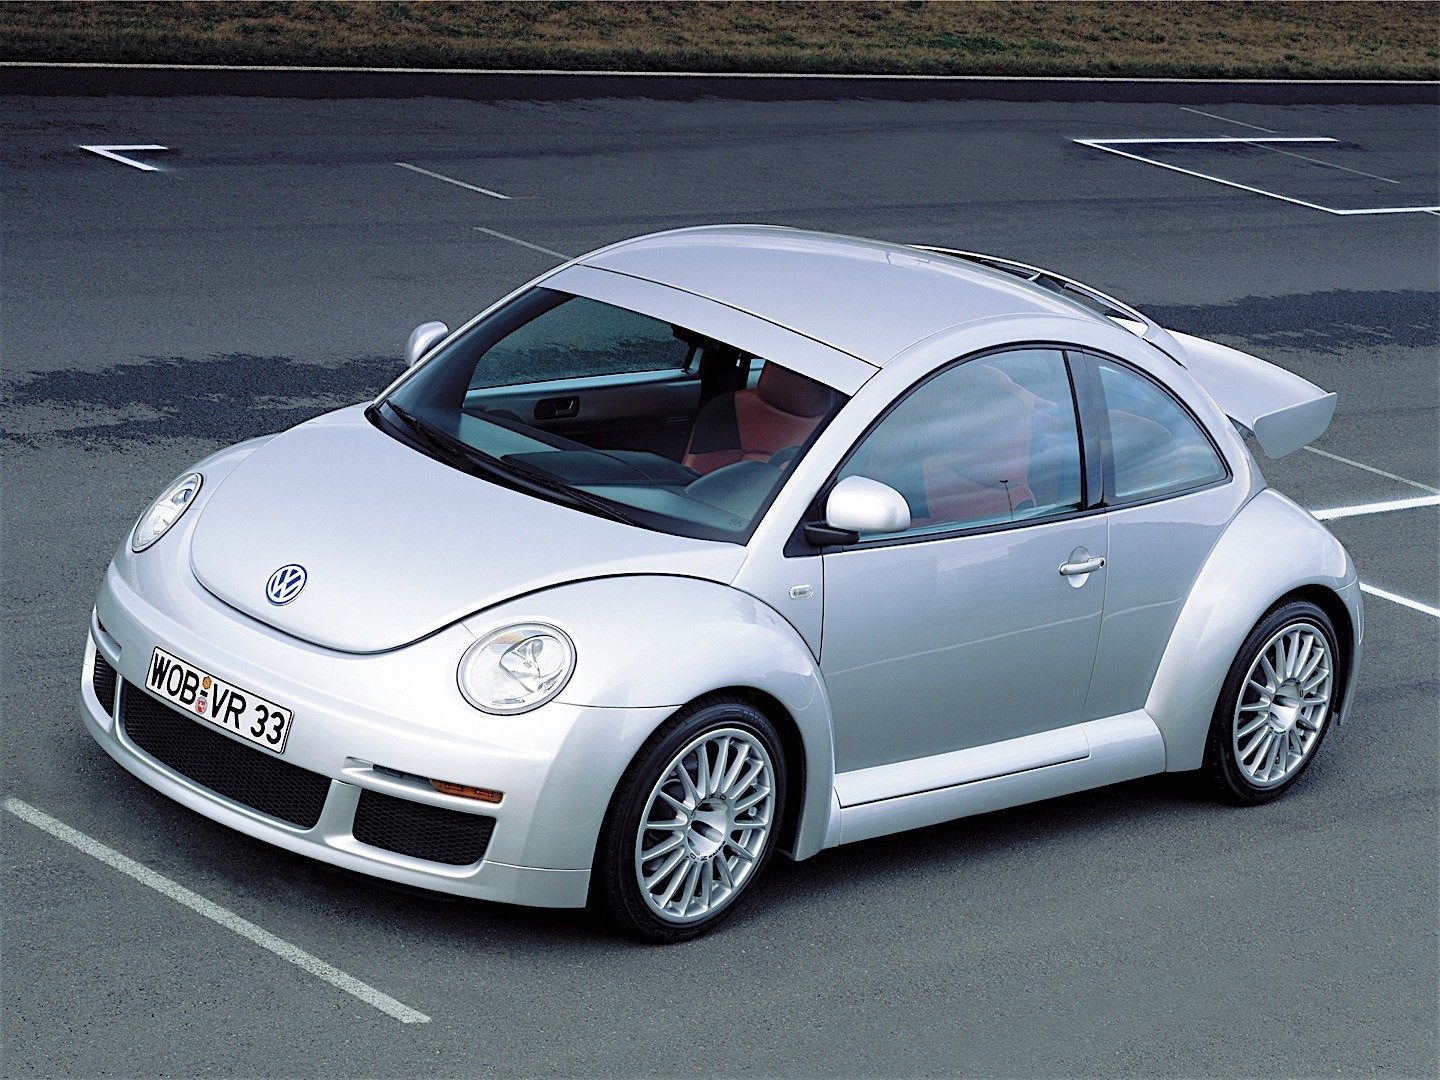 VW-Beetle-RSI-2.jpg